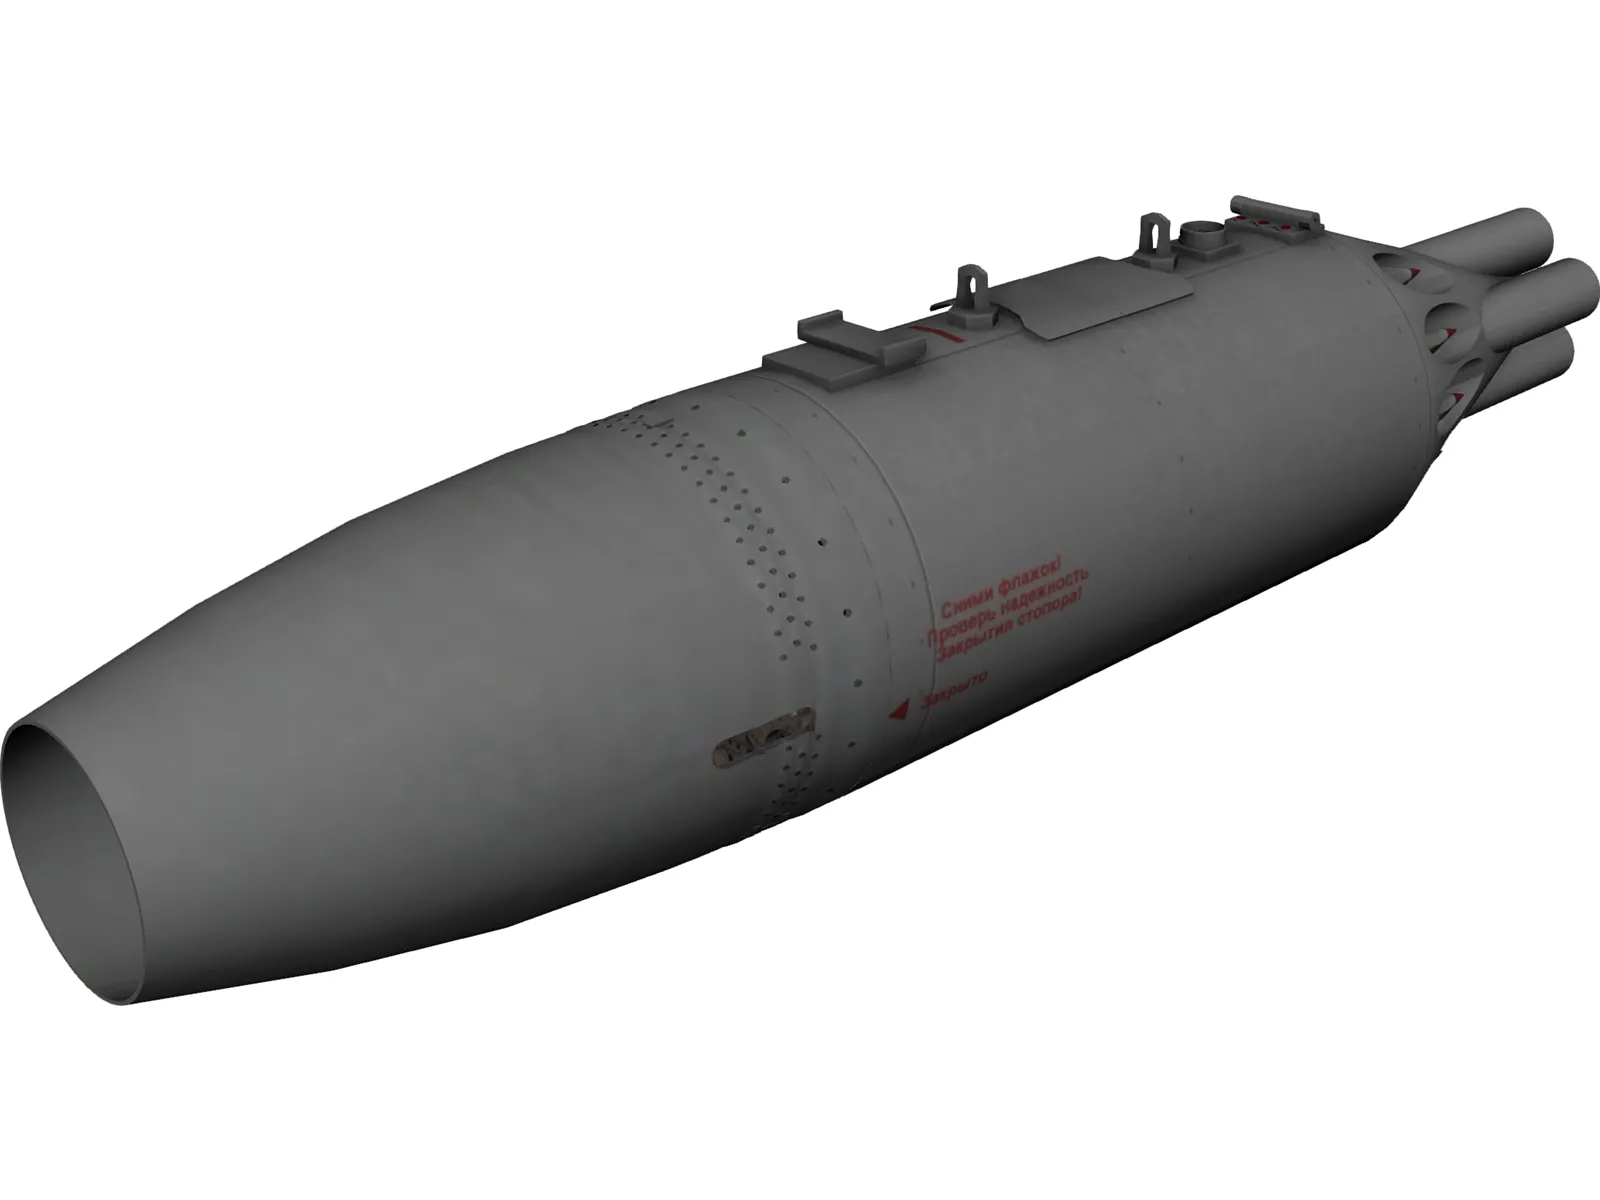 UB-16-M57-UM Rocket Pod 3D Model